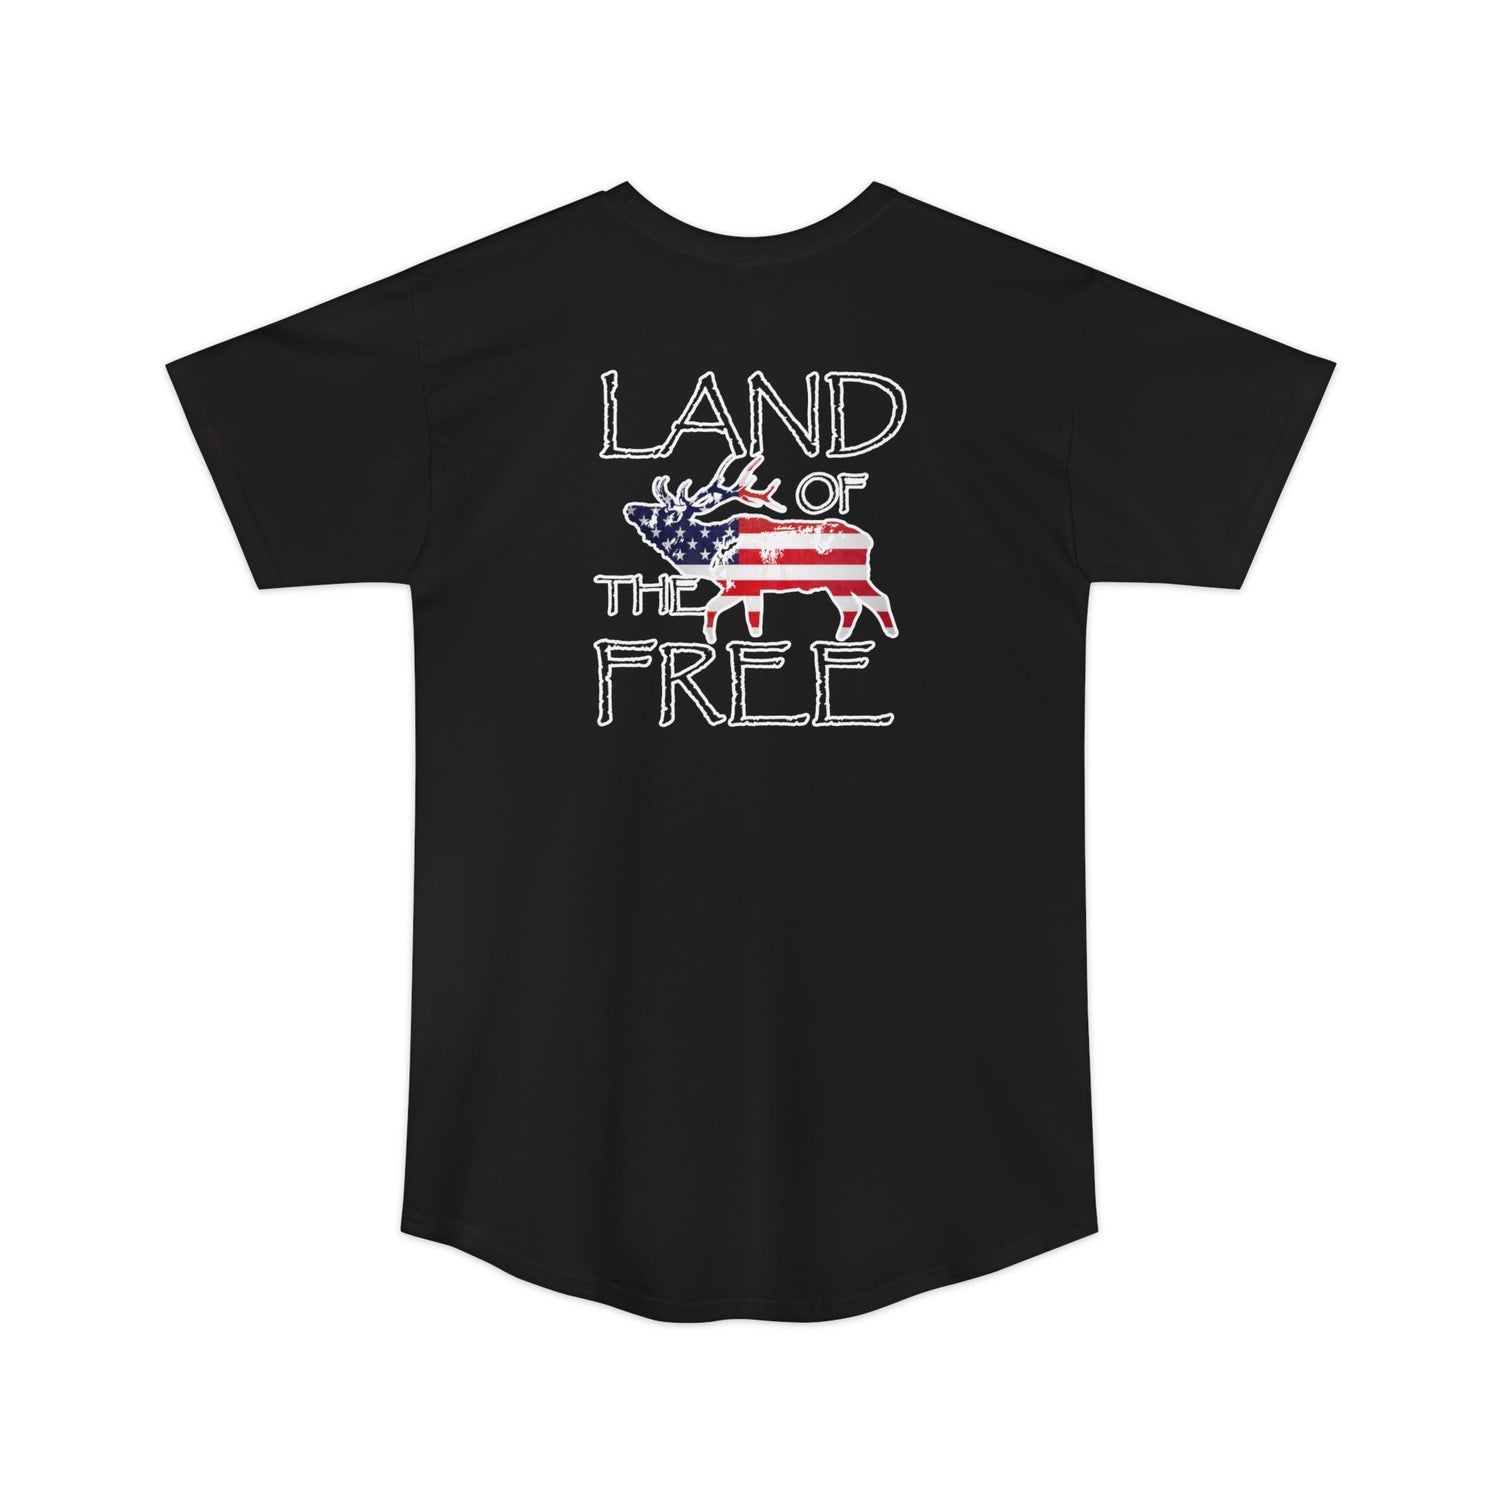 Athletic tall patriotic elk hunting t-shirt, color black, back design placement